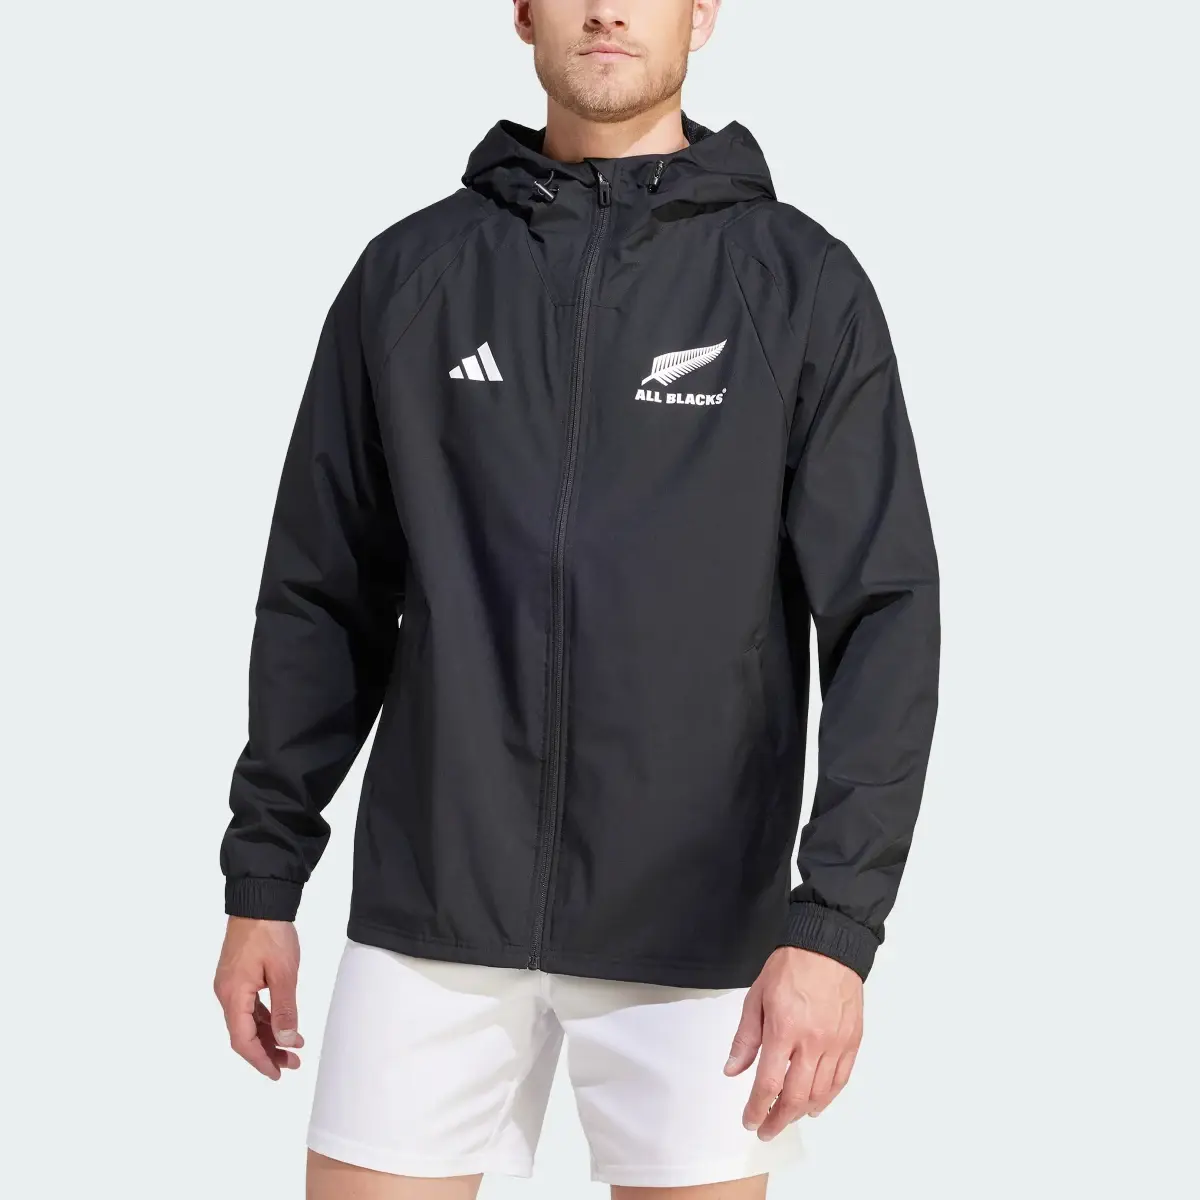 Adidas All Blacks Rugby Wind Jacket. 1